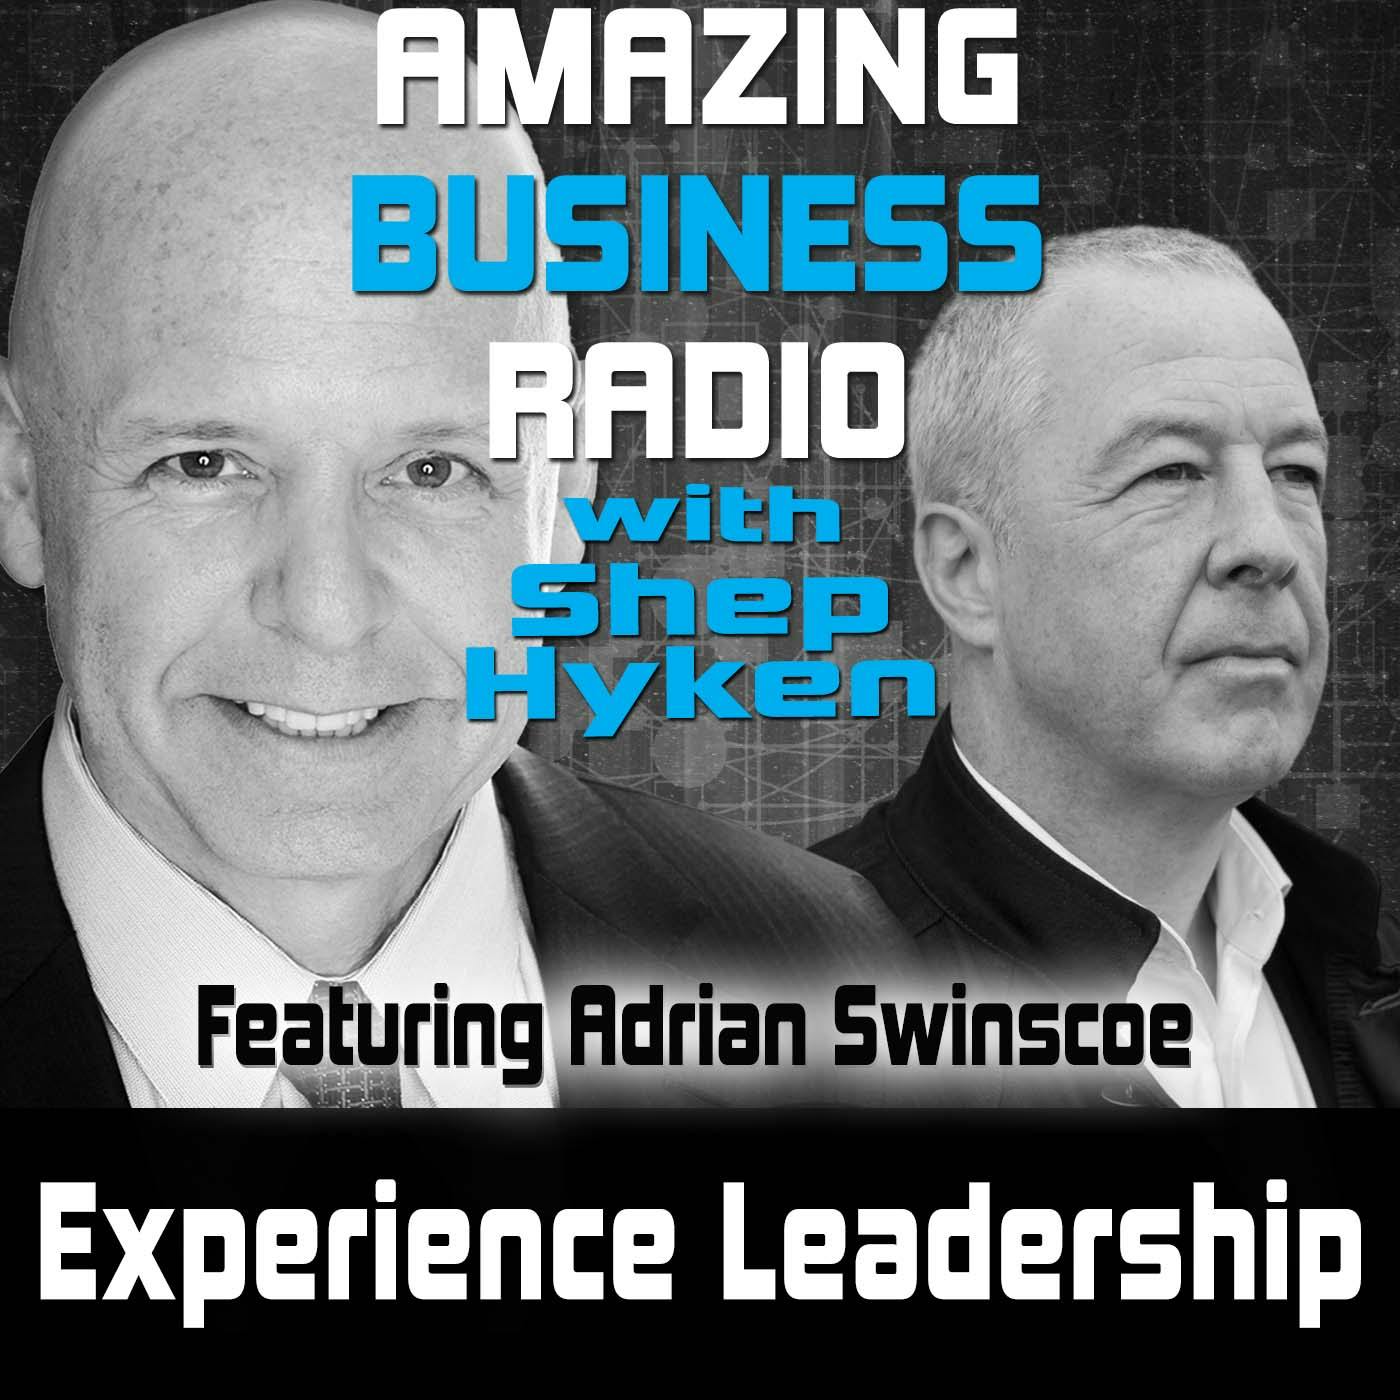 Experience Leadership Featuring Adrian Swinscoe